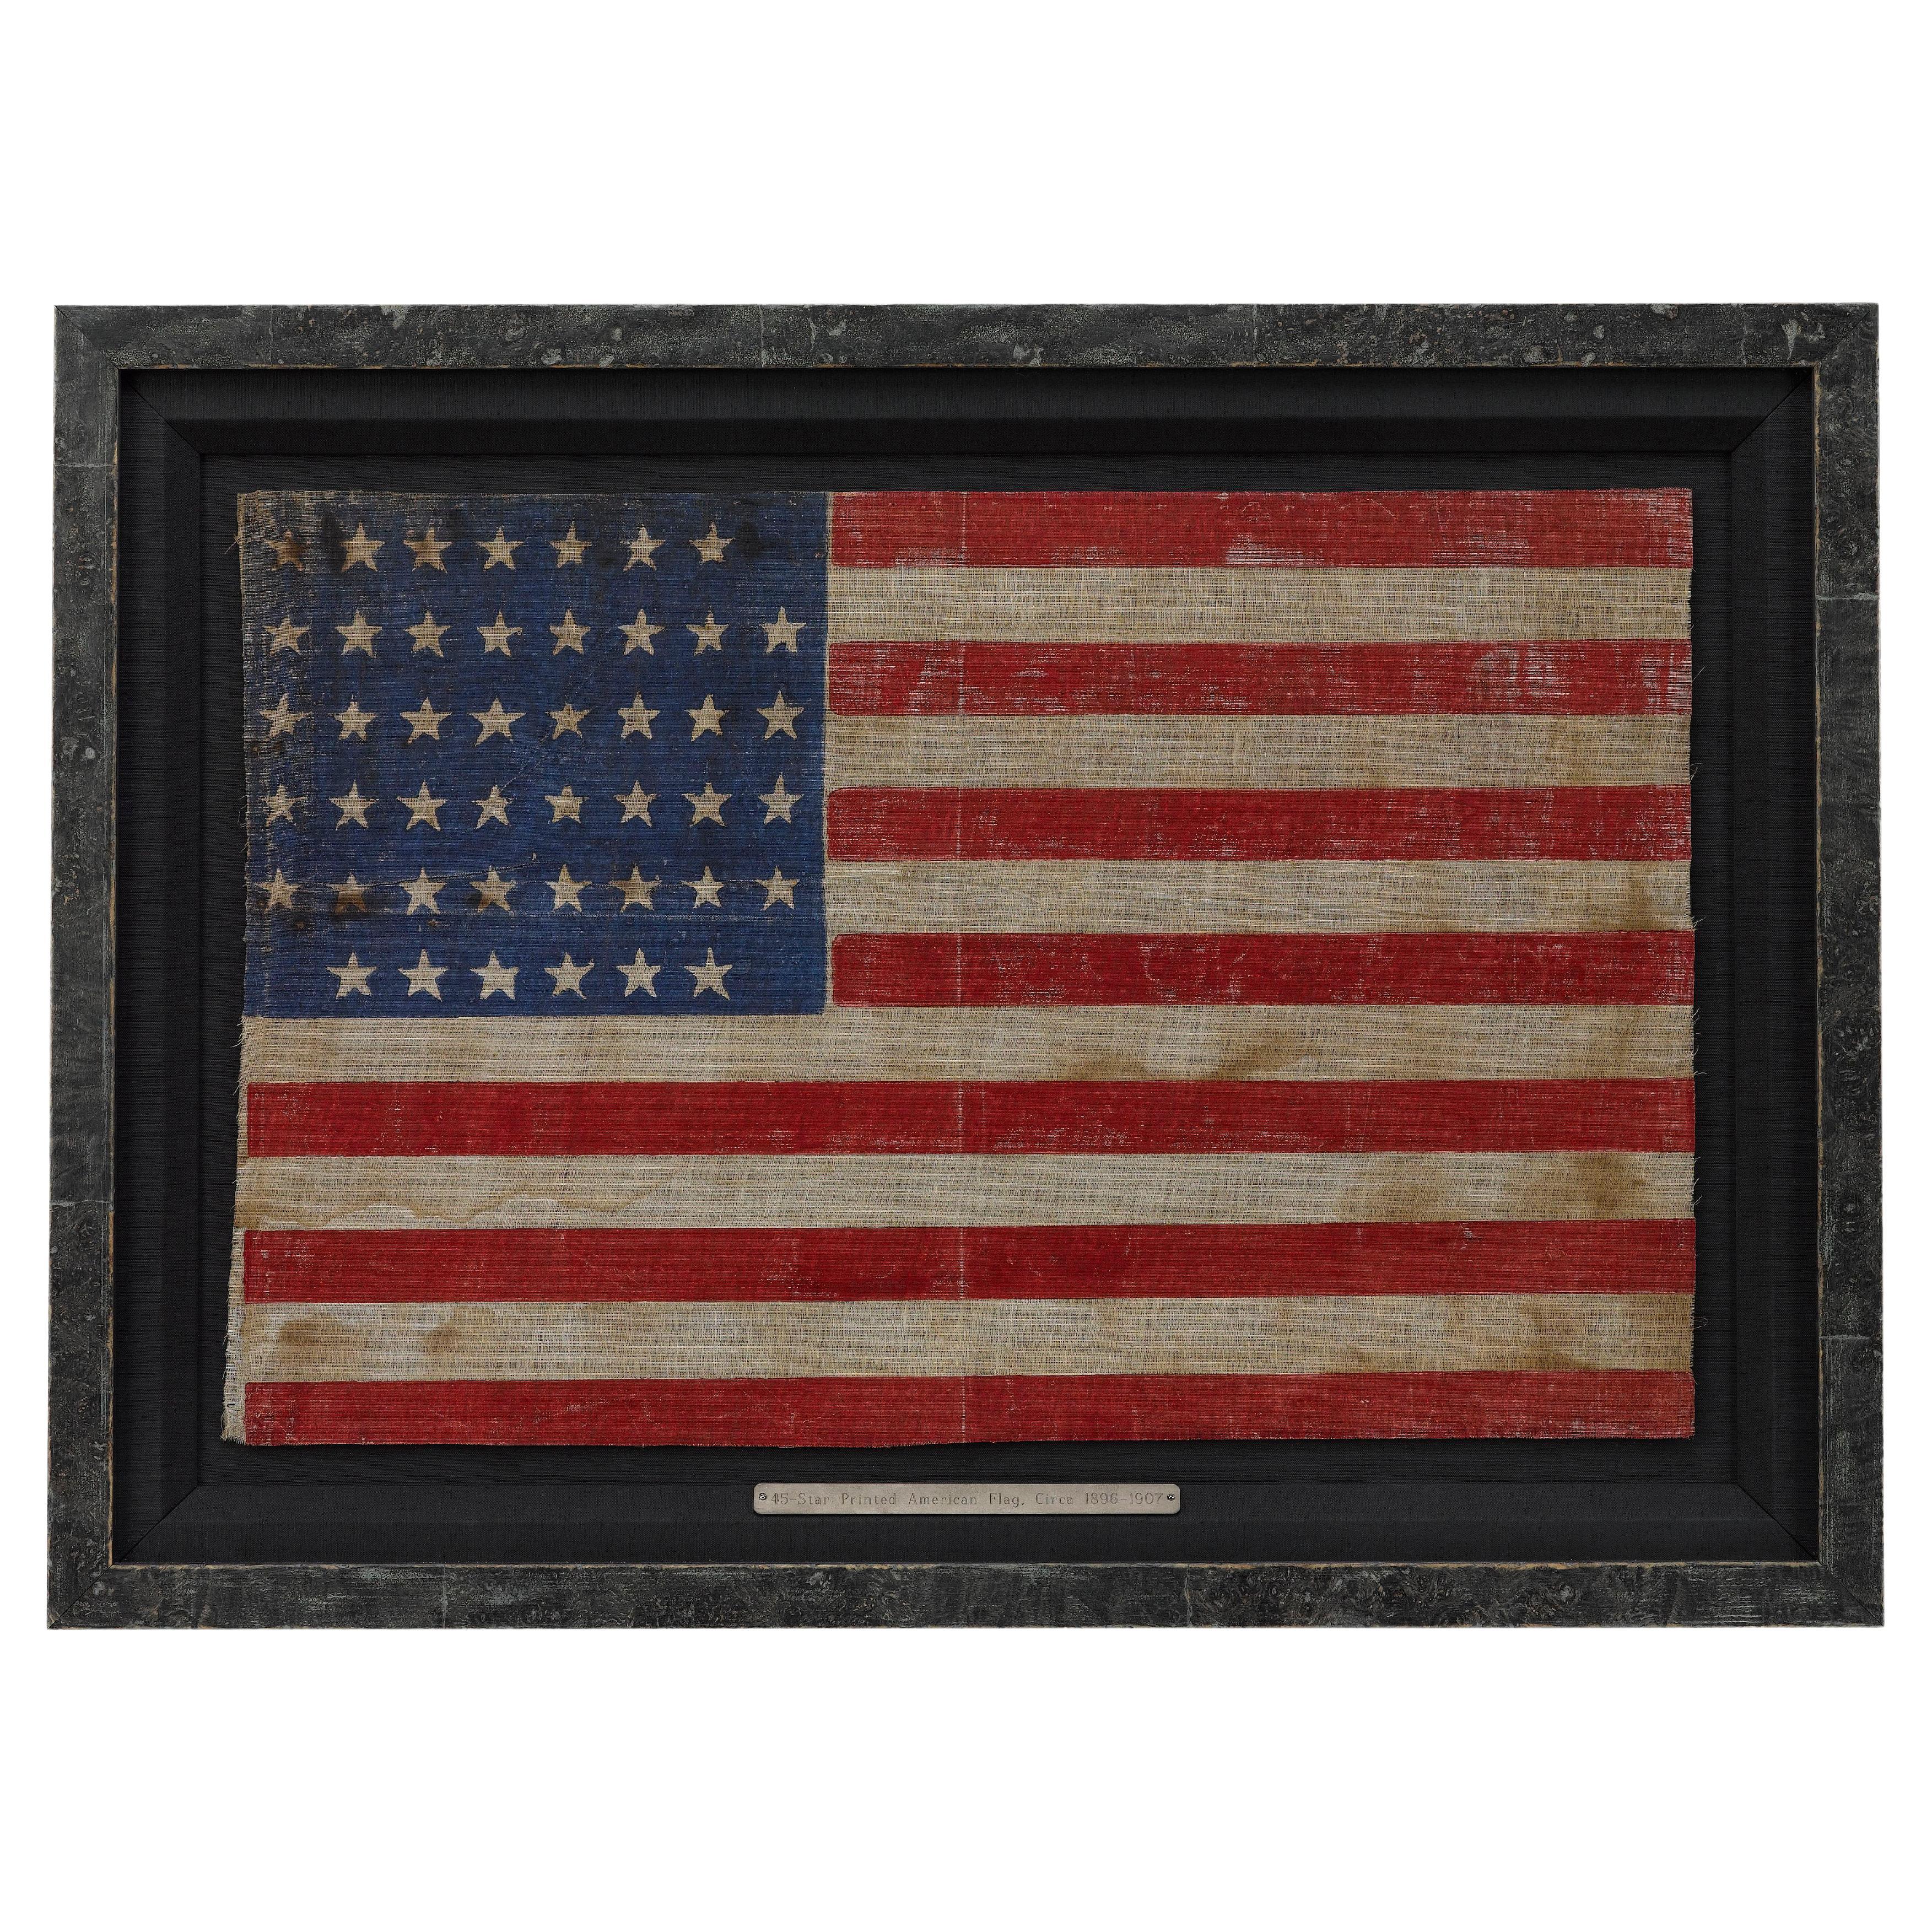 45-Star American Flag Printed on Muslin, 1896-1907